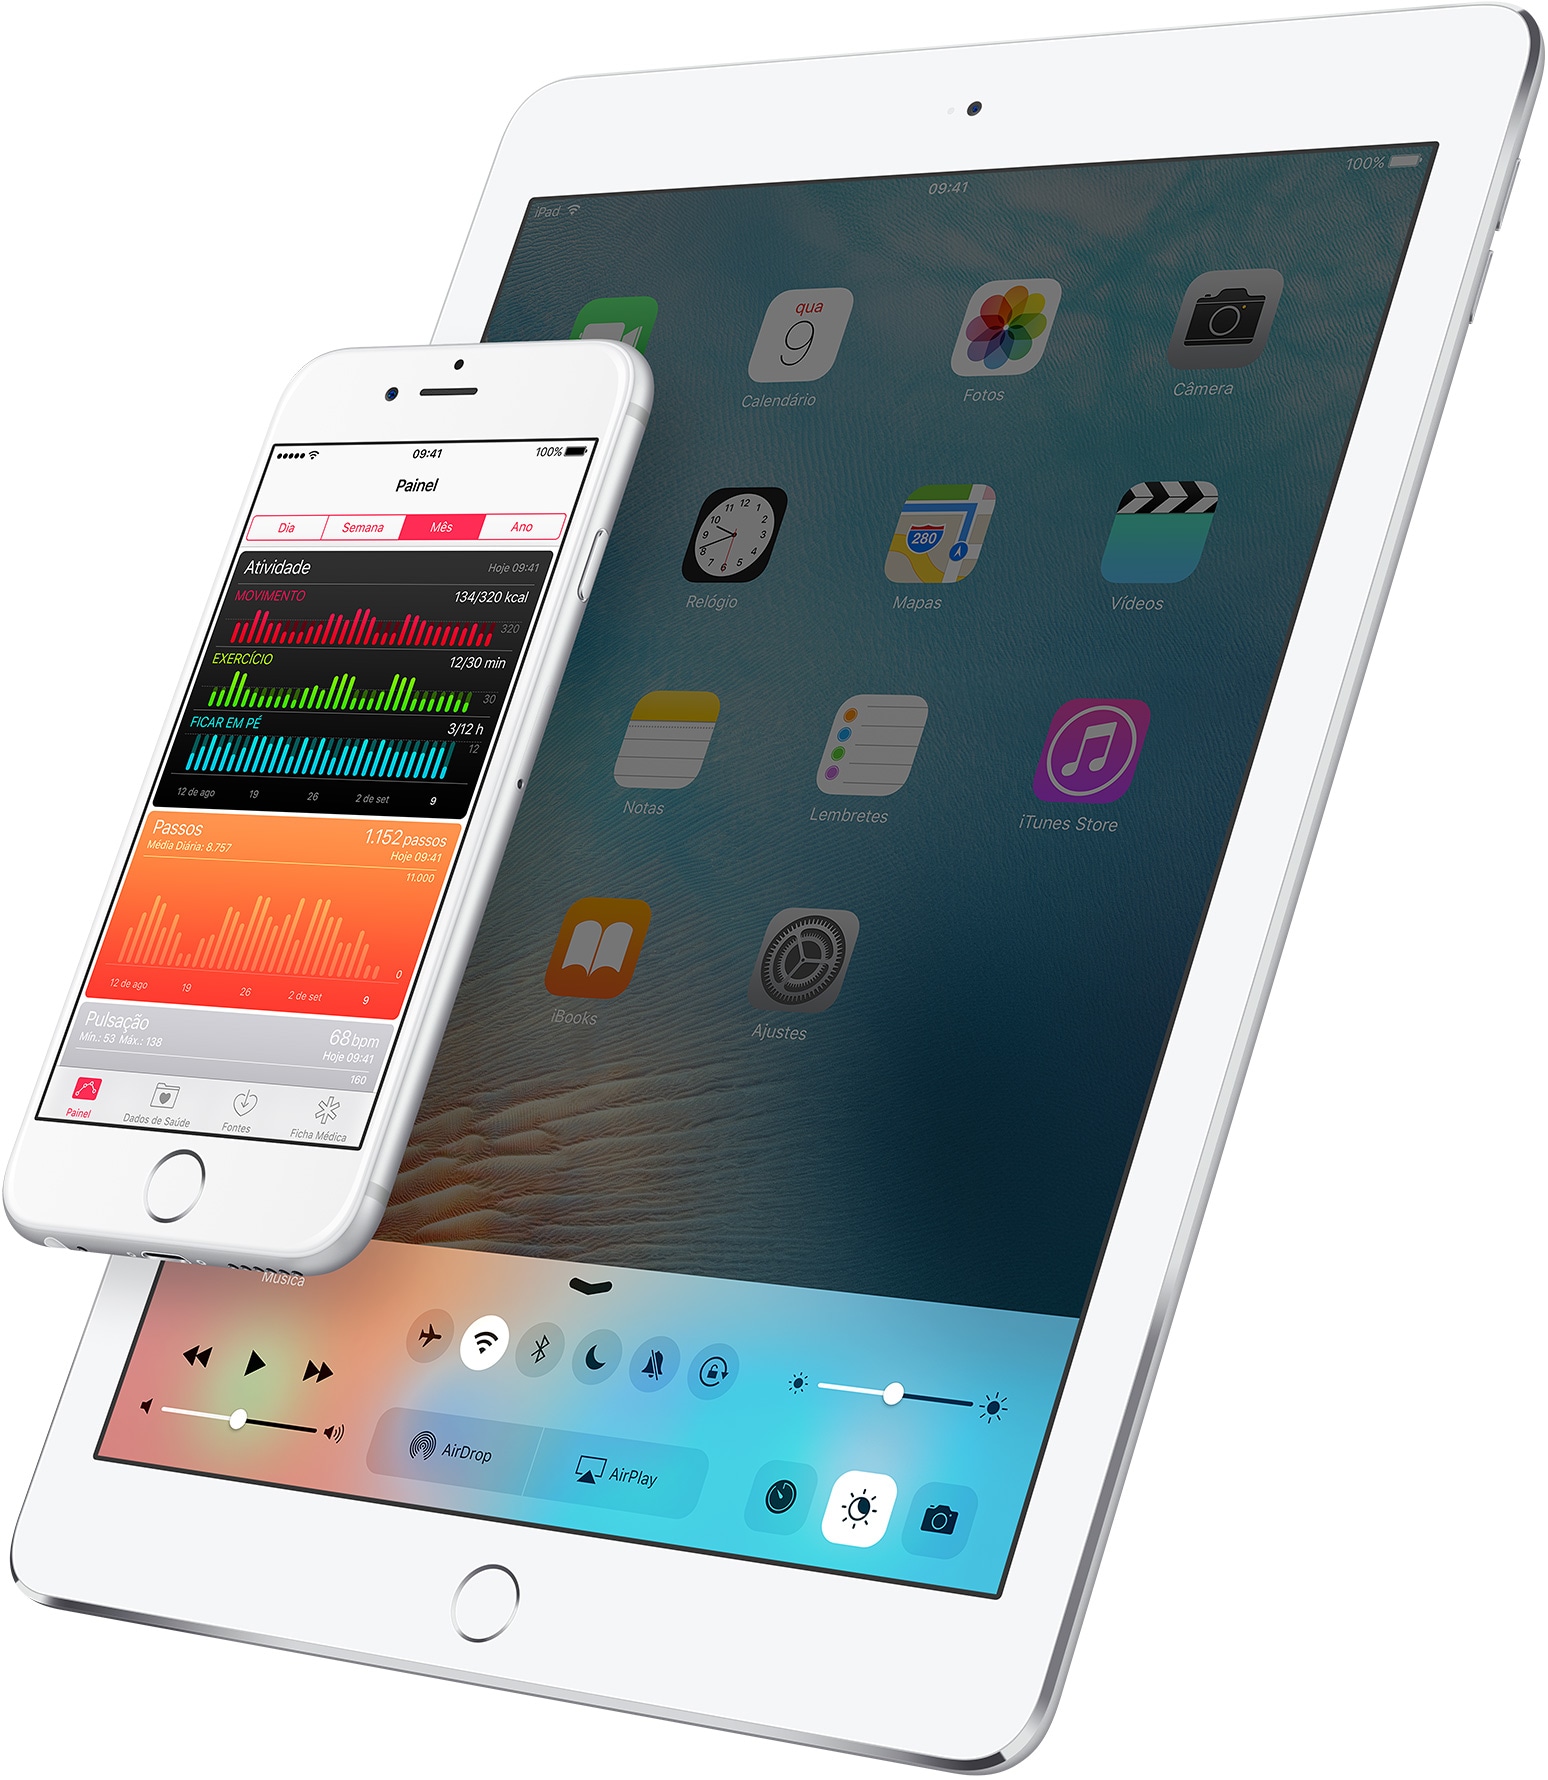 First betas of iOS 9.3.2, OS X 10.11.5, watchOS 2.2.1 and tvOS 9.2.1 are released [atualizado]